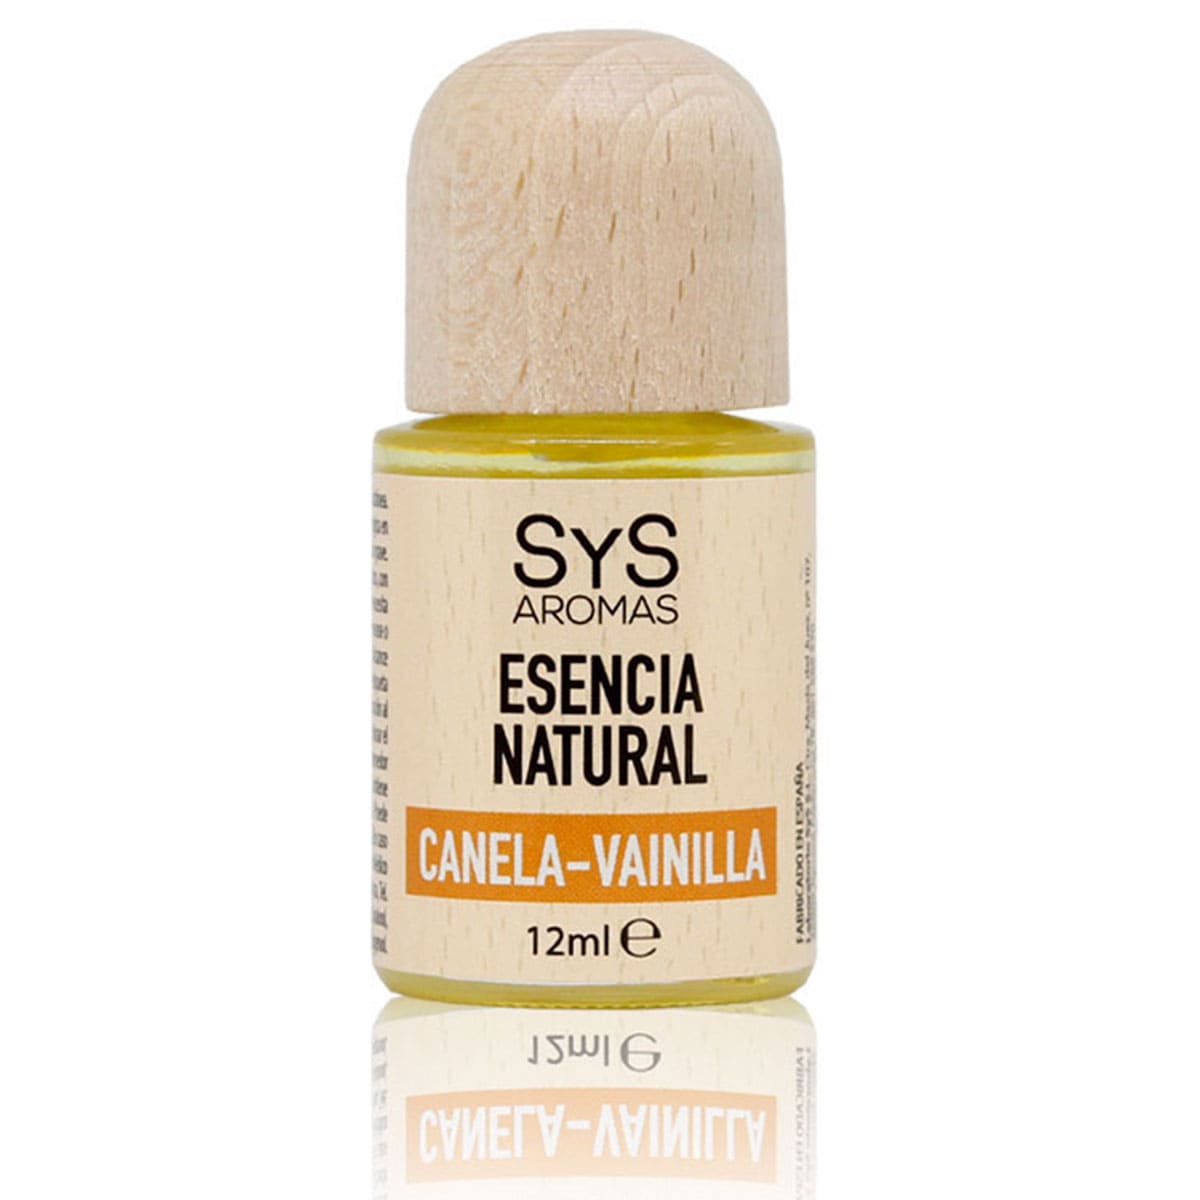 Buy Vanilla-Cinnamon Essence 12ml SYS Aromas